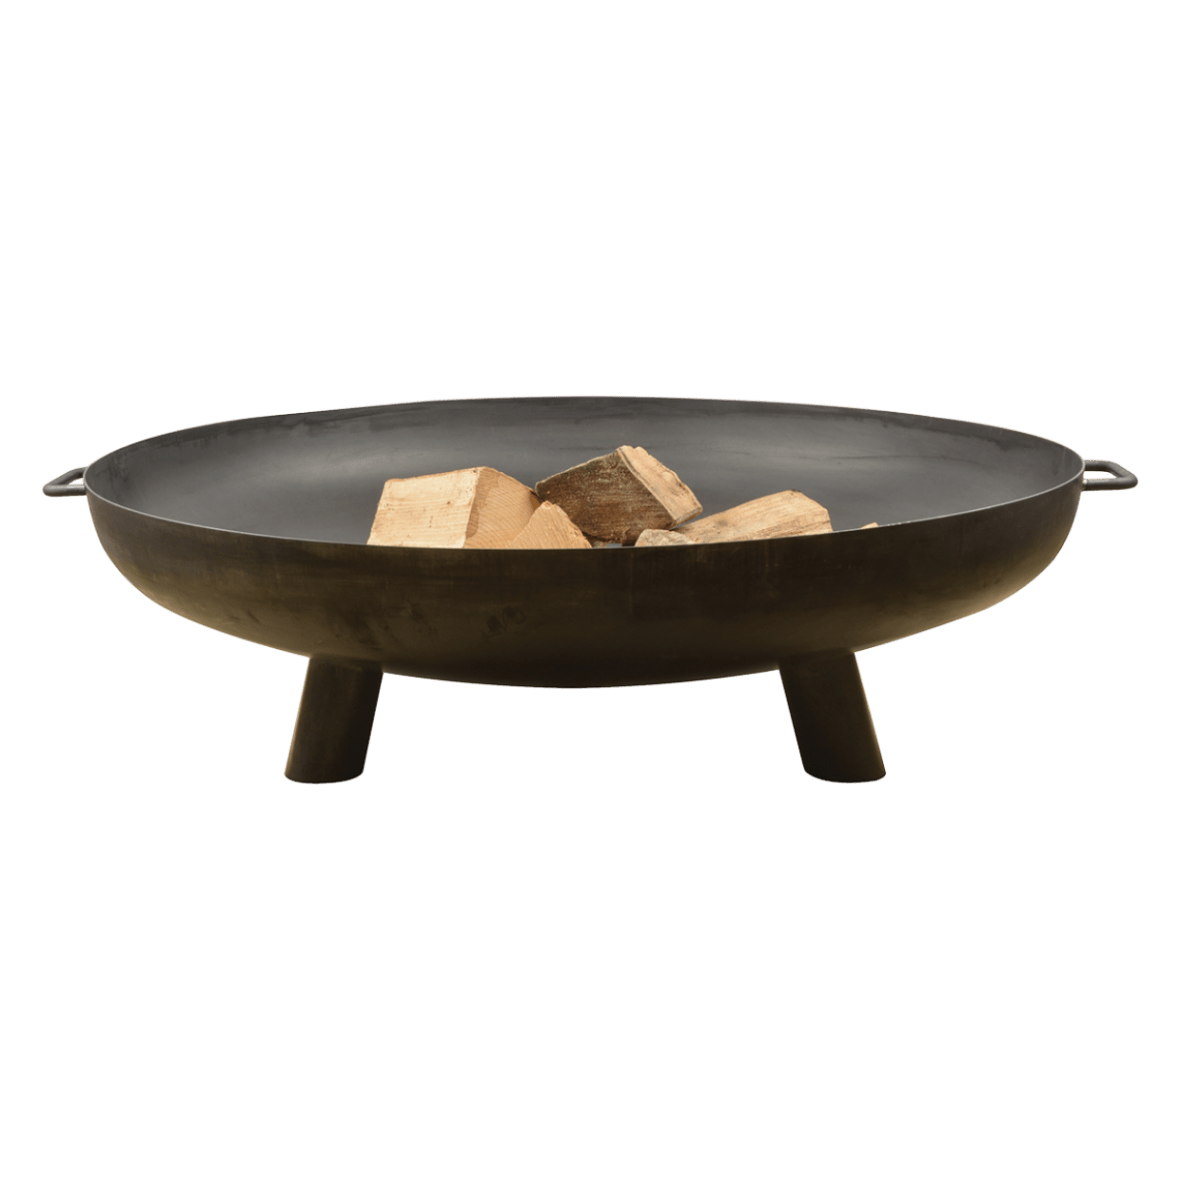 Fire bowl design 100 cm